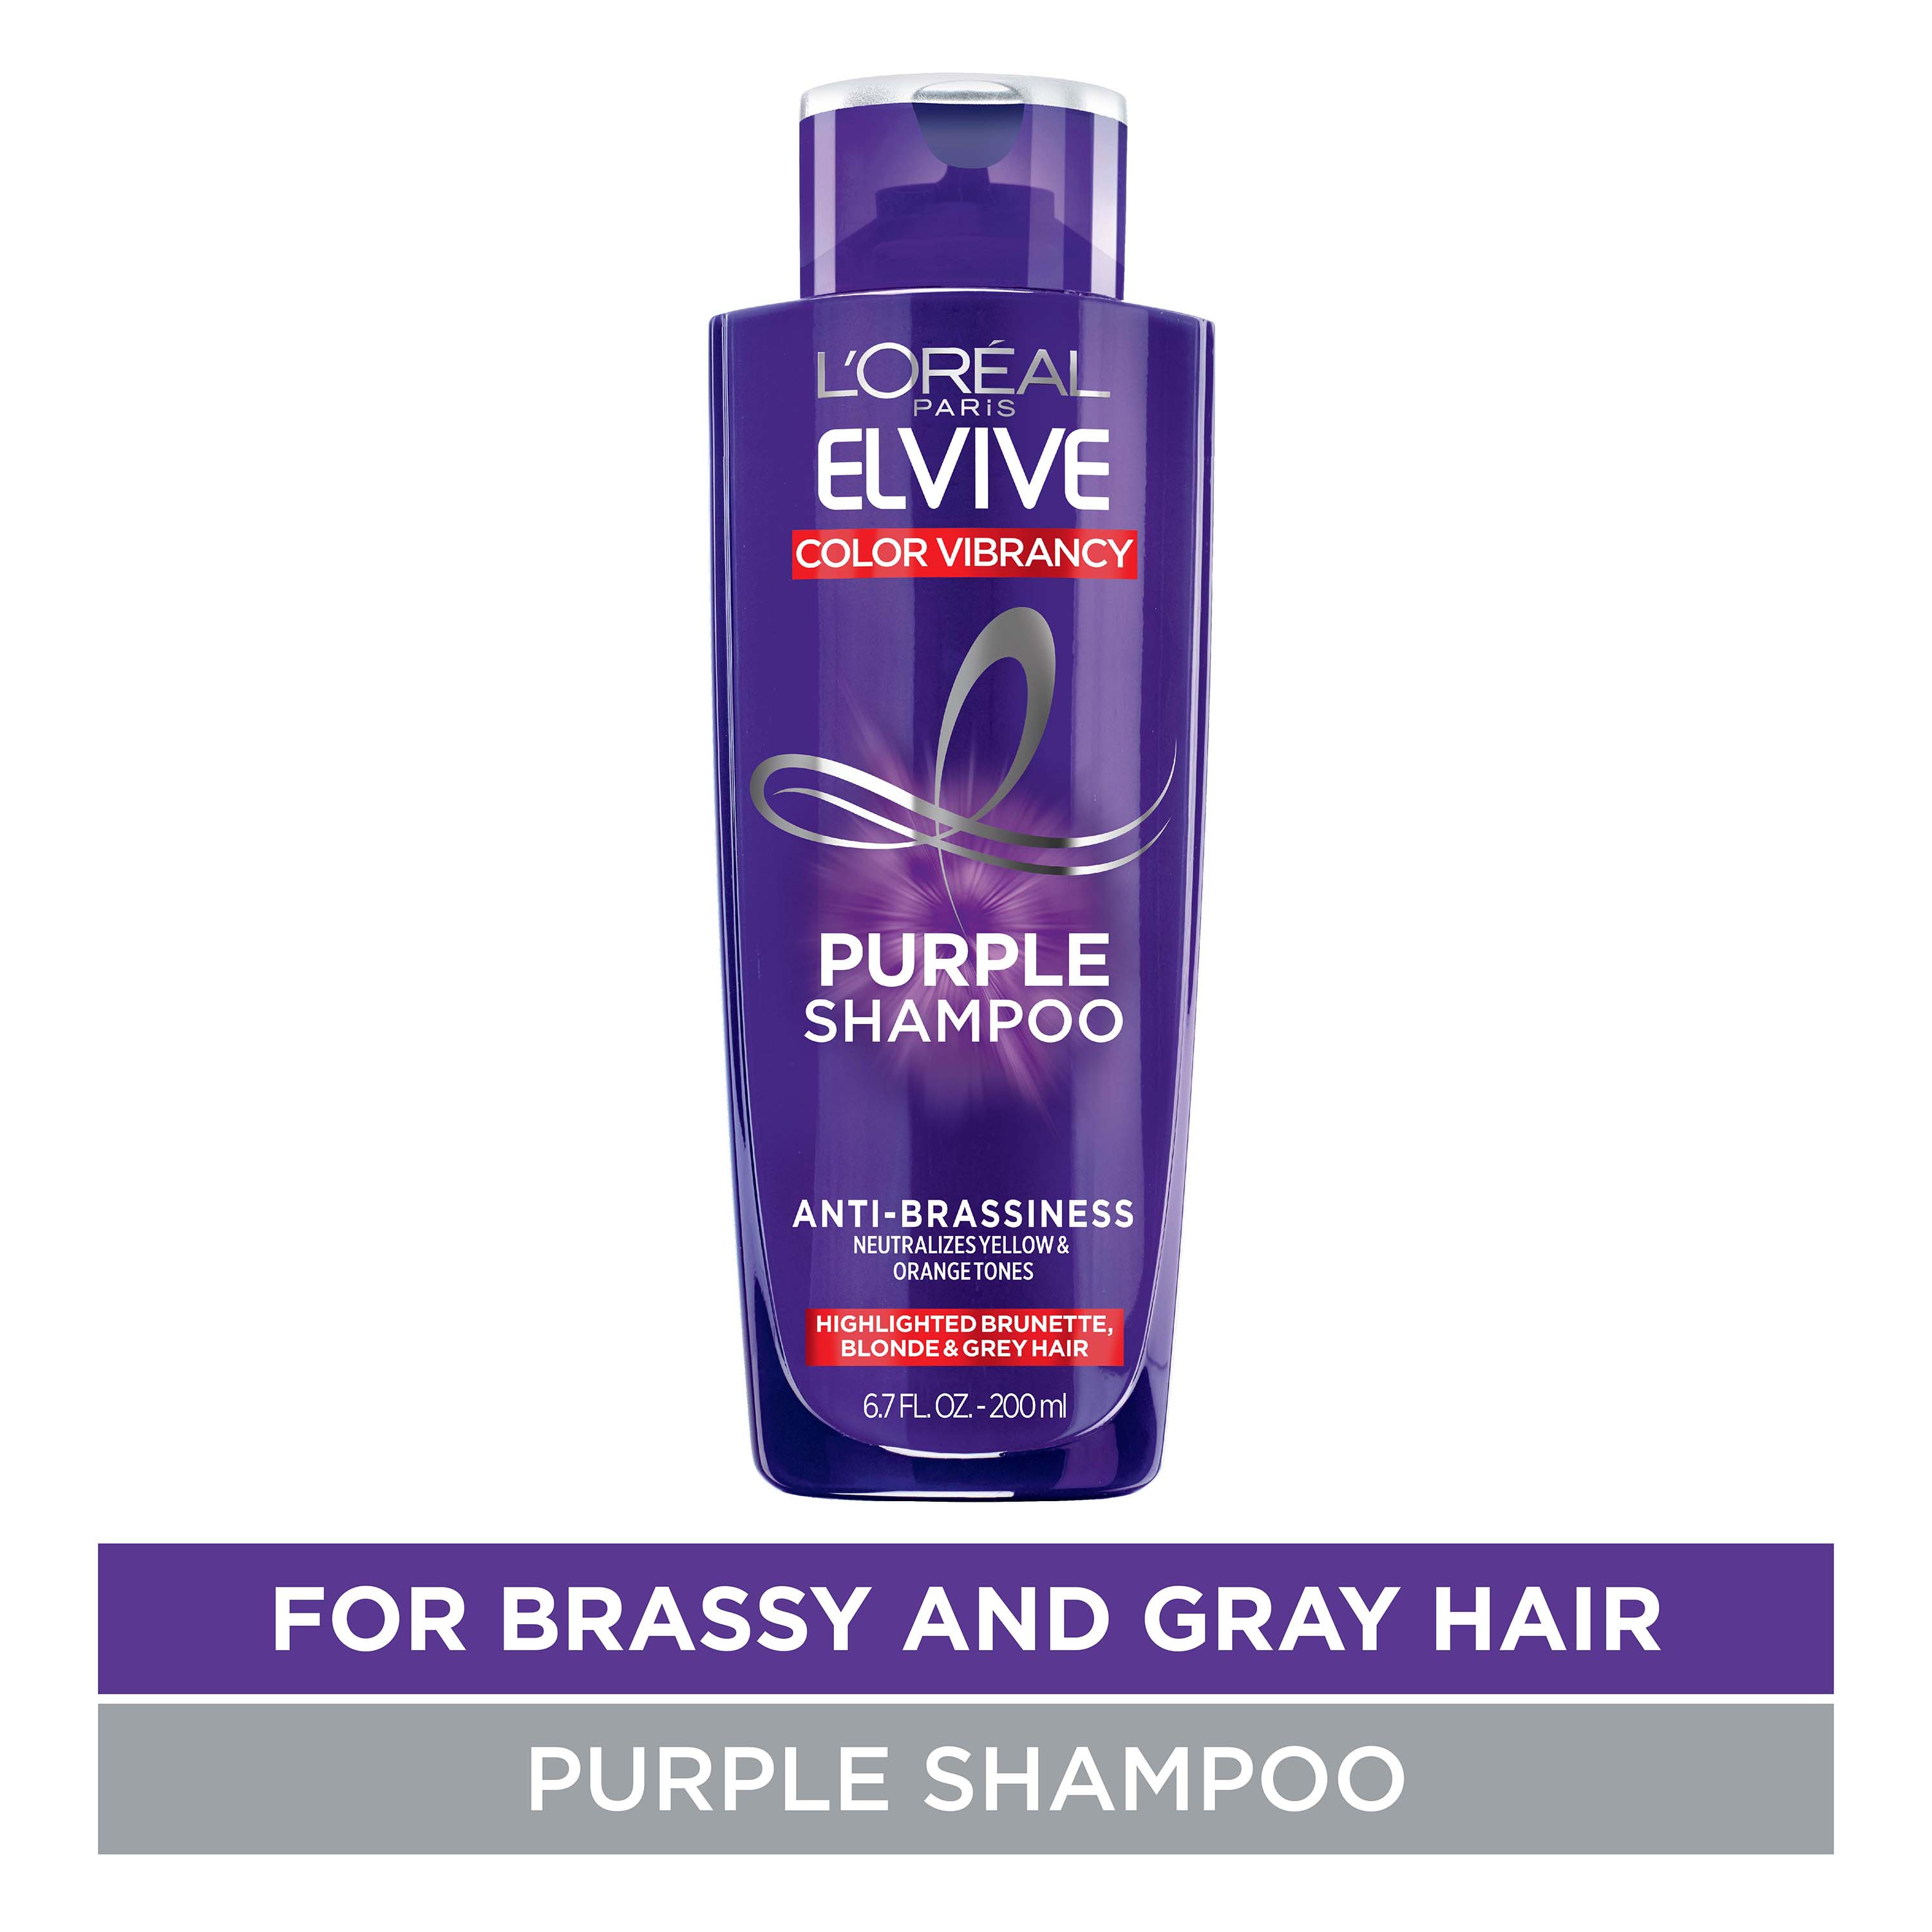 L'Oreal Paris Elvive Color Vibrancy Nourishing Purple Shampoo, 6.7 fl oz - image 3 of 12